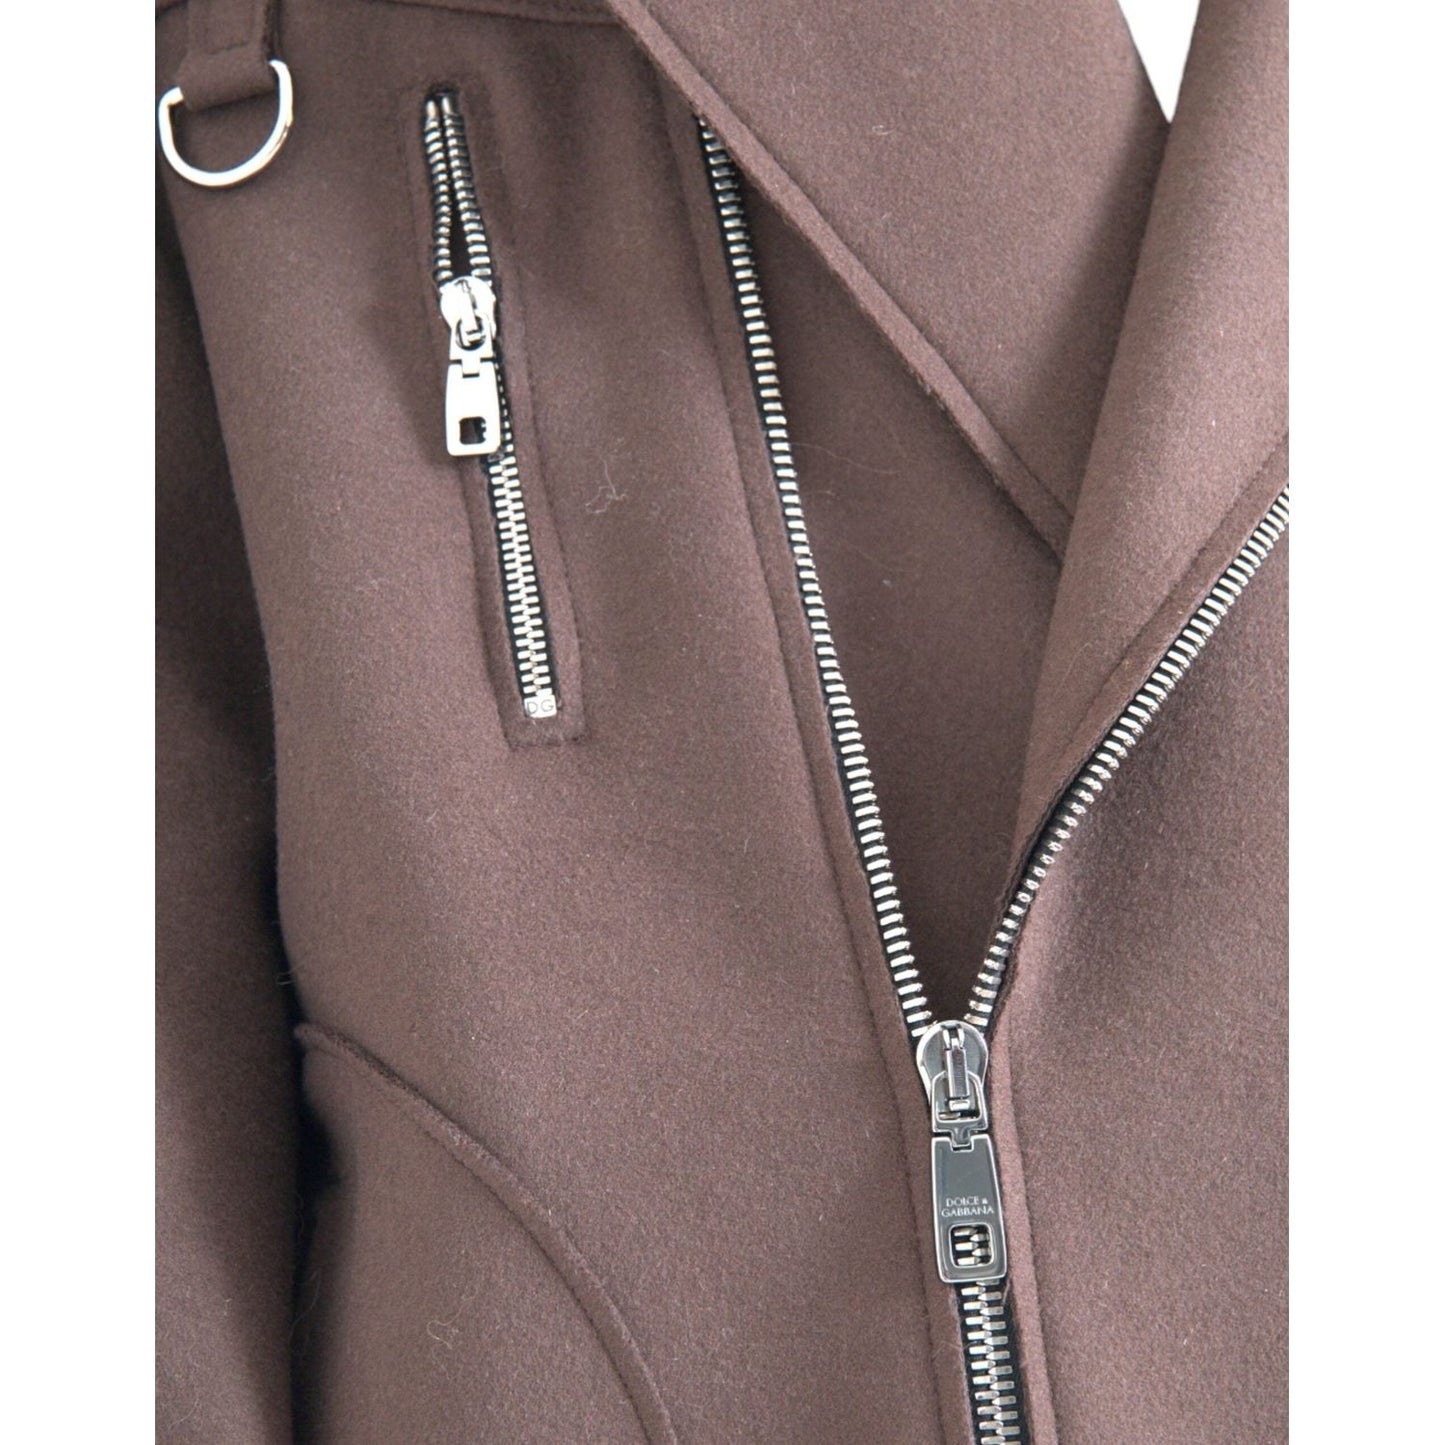 Dolce & Gabbana Brown Coat Short Biker Wool Jacket brown-coat-short-biker-wool-jacket